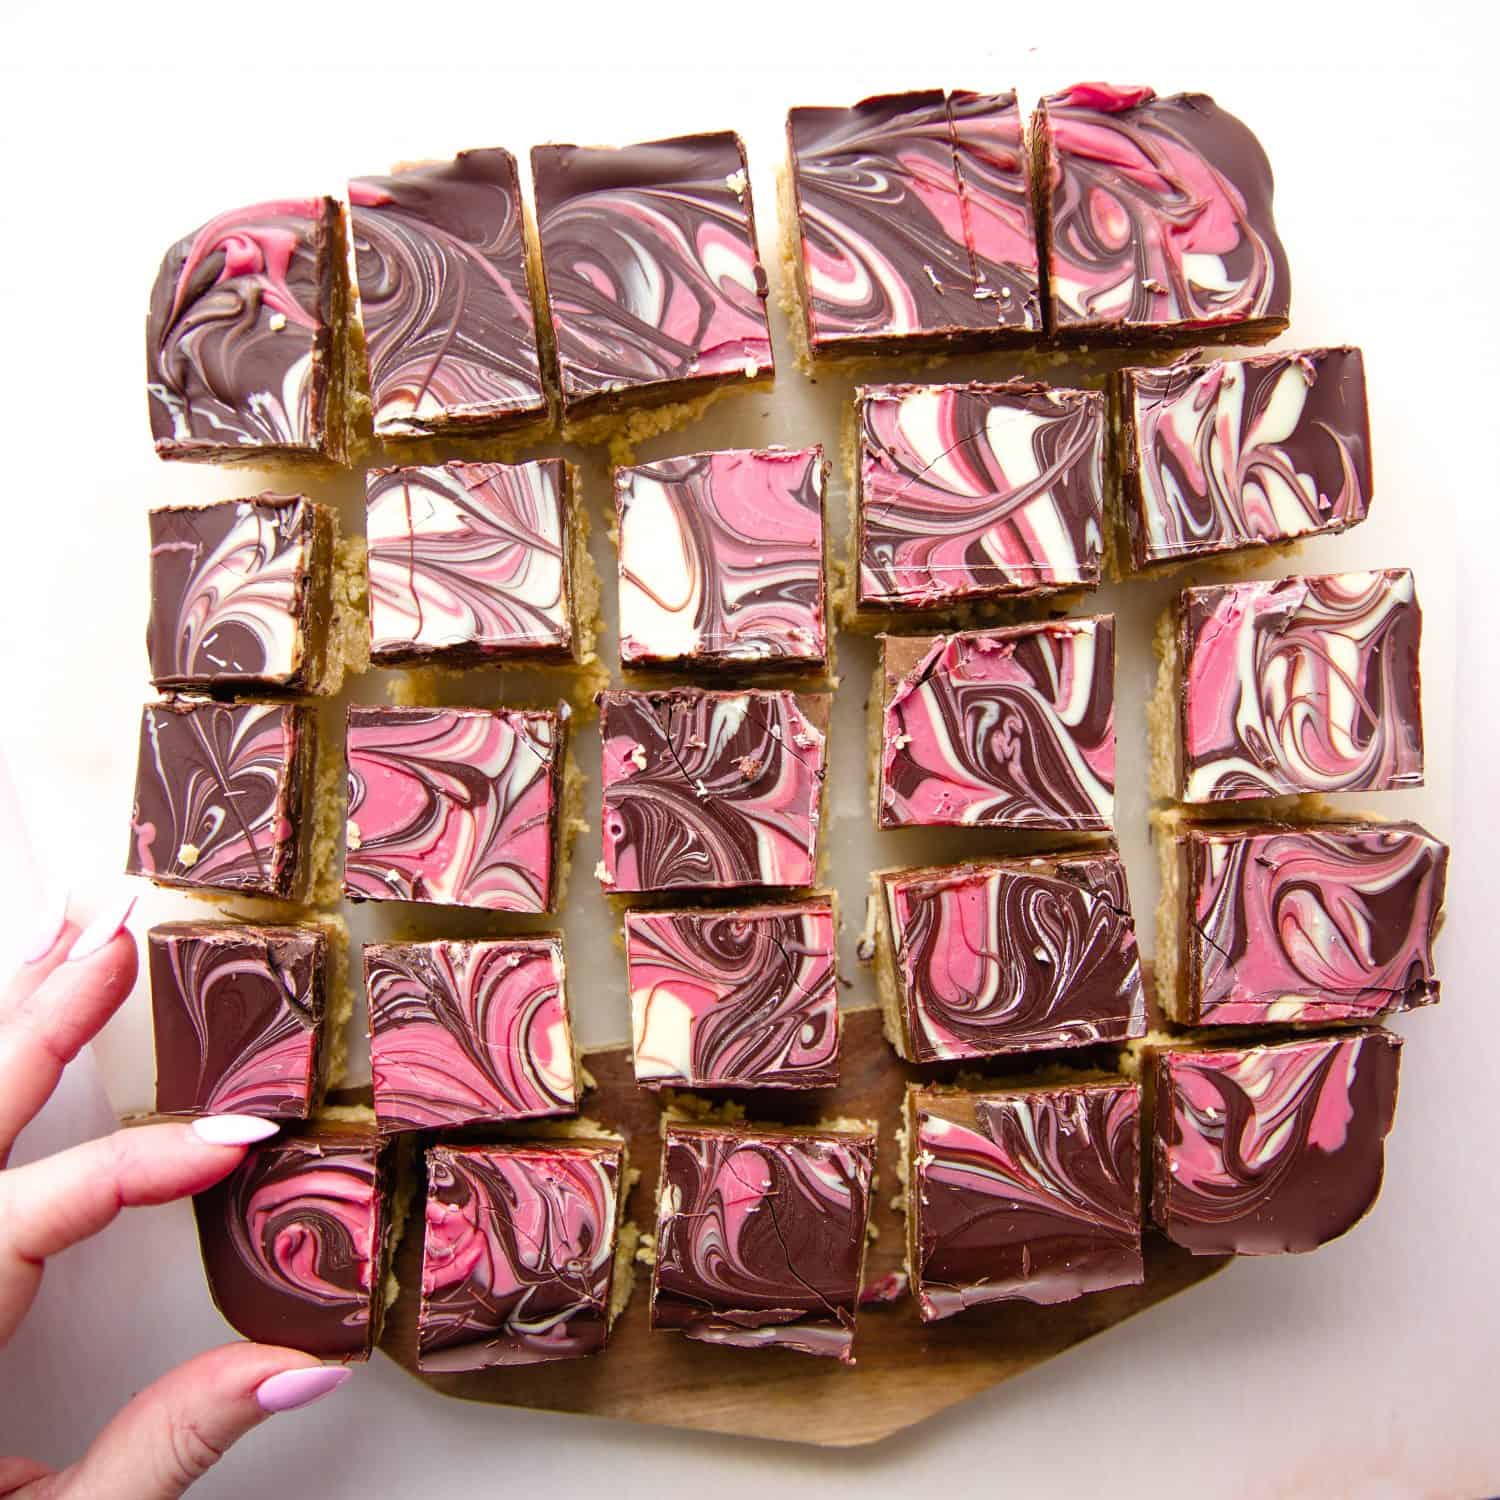 A slab of millionaire caramel shortbread cut into individual slices